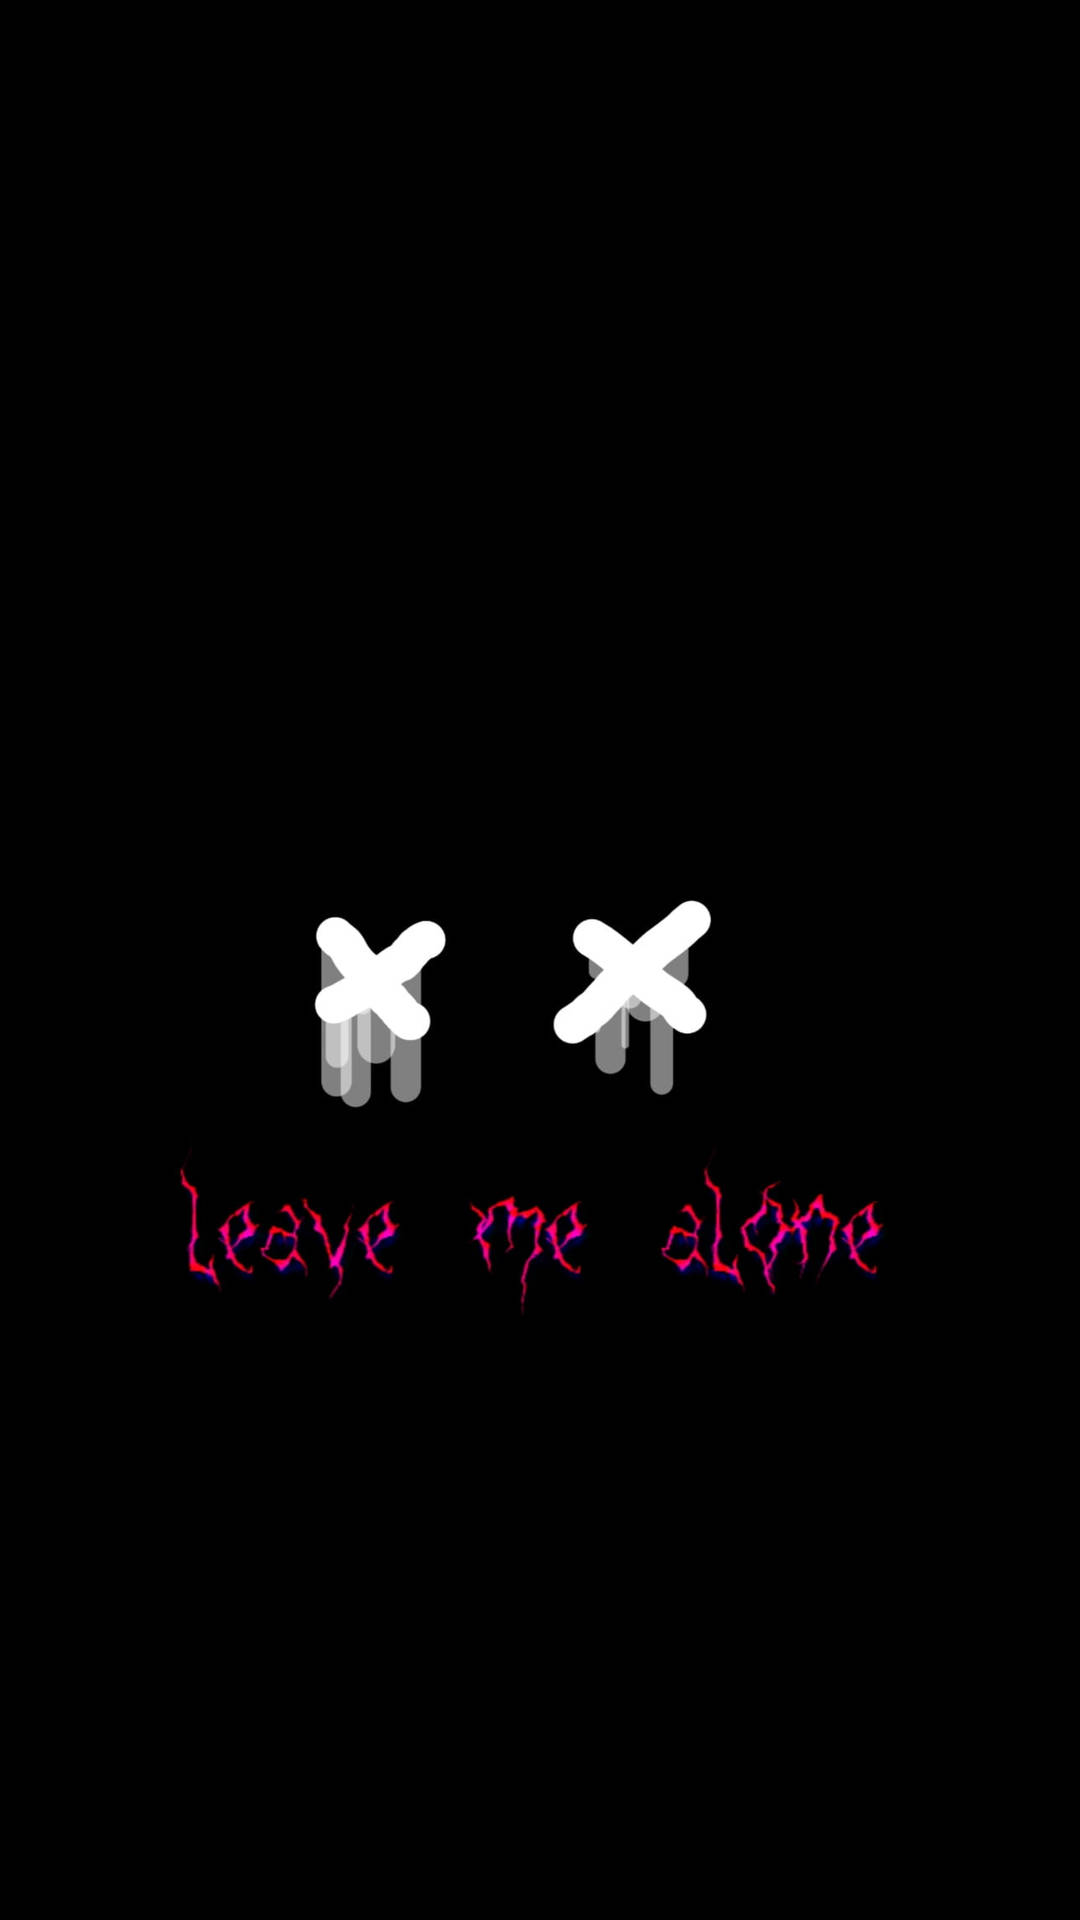 Free Leave Me Alone Wallpaper Downloads, [100+] Leave Me Alone Wallpapers  for FREE 